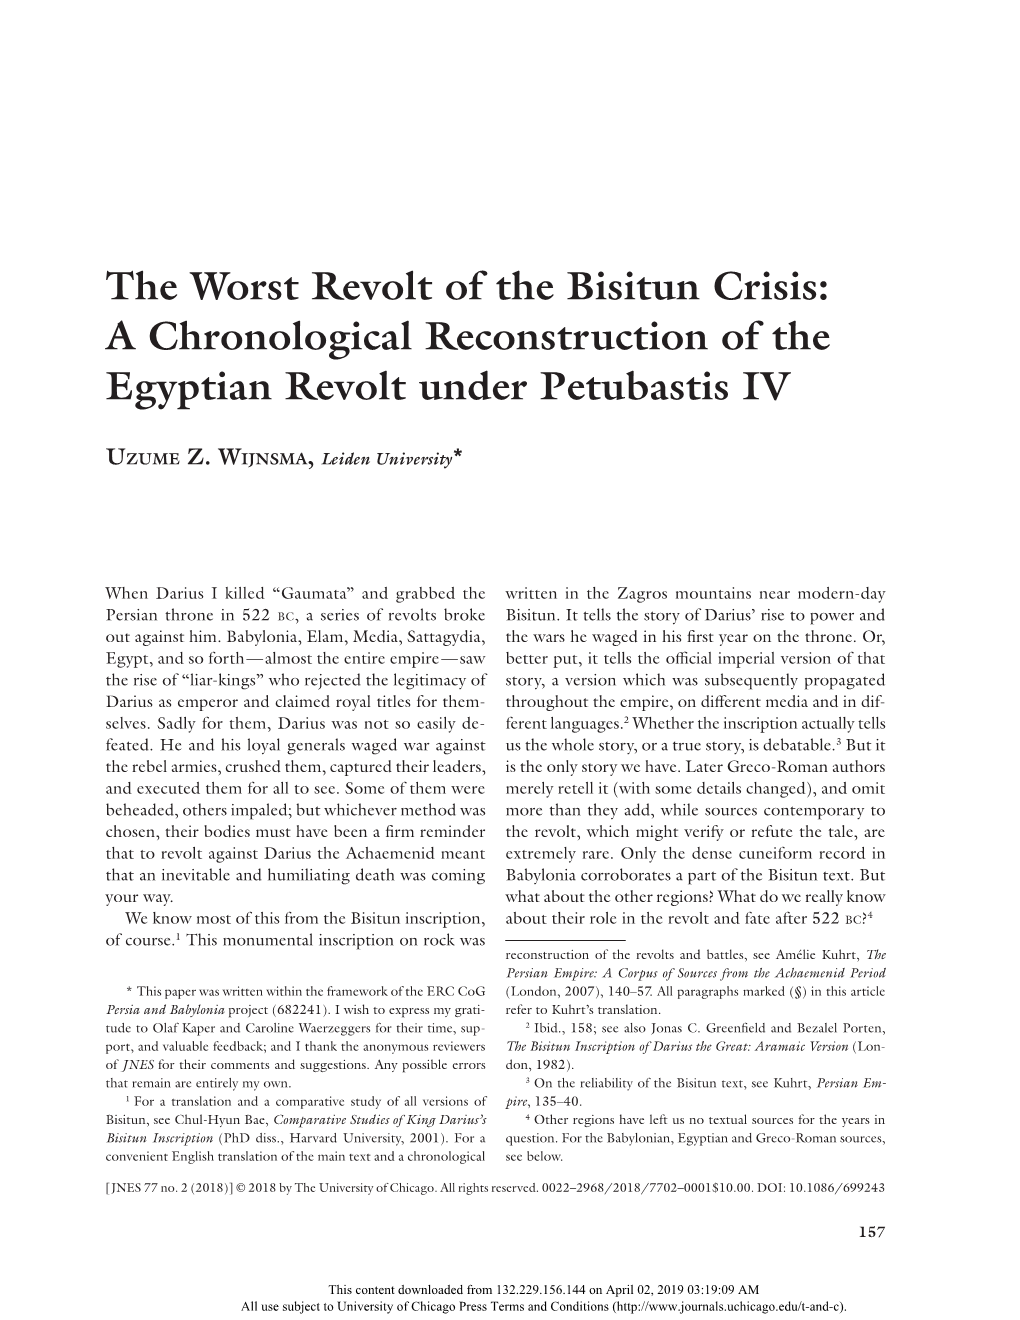 The Worst Revolt of the Bisitun Crisis: a Chronological Reconstruction of the Egyptian Revolt Under Petubastis IV